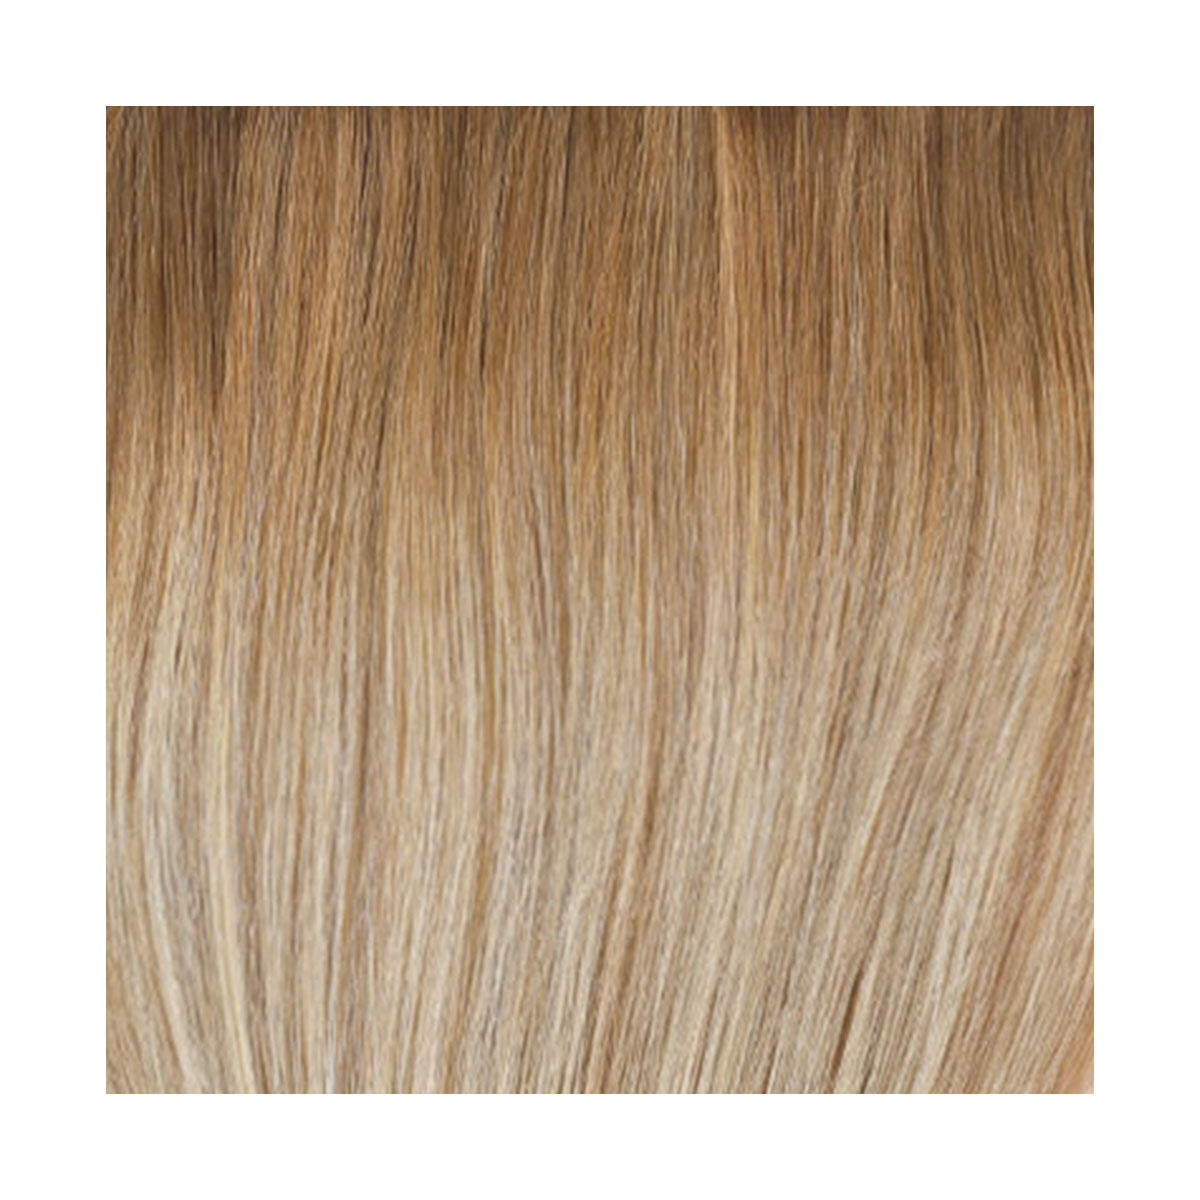 Colour Sample B5.0/8.3 Brownish Blonde Balayage